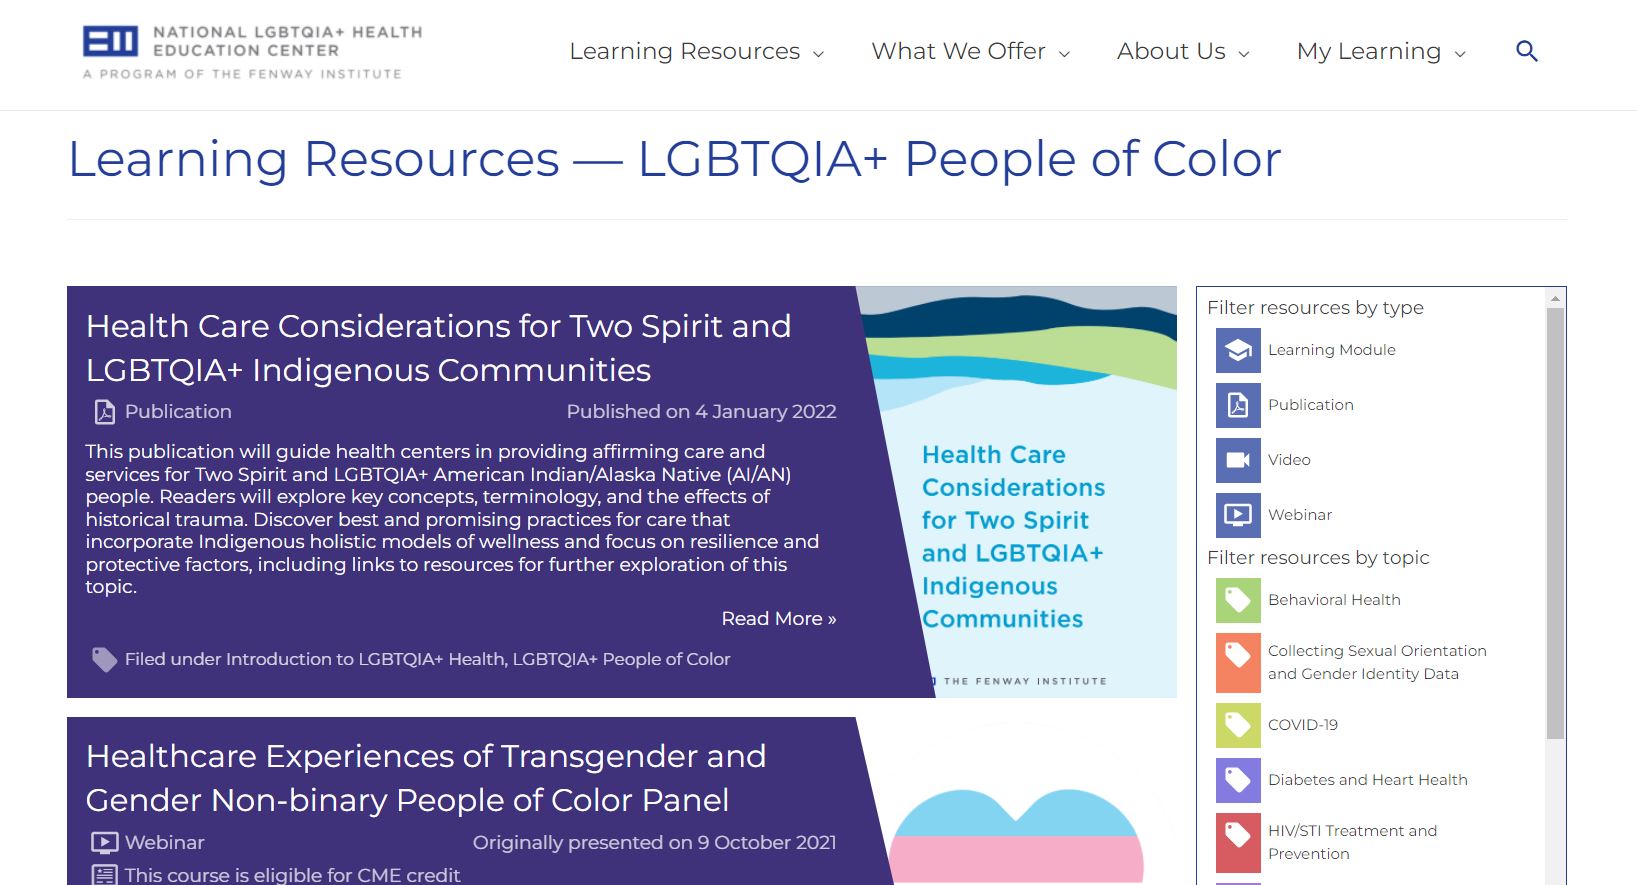 LGBTQIA+ People of Color